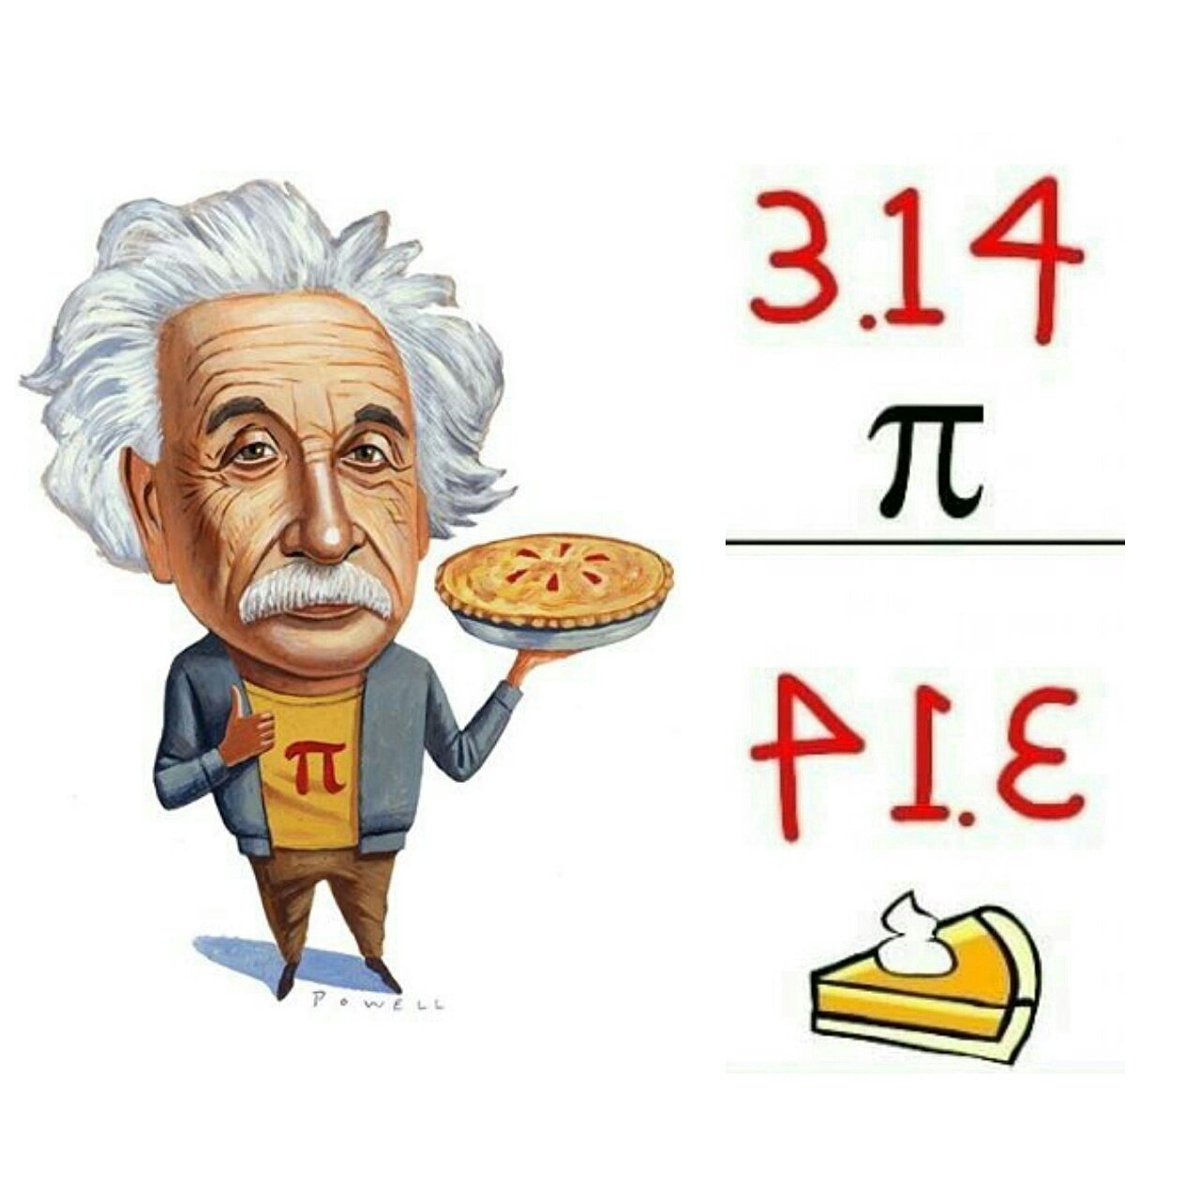 Pi gününün (3.14) #Einstein in doğum günü olduğunu biliyor muydunuz? #PiDay #HappyBirthdayEinstein